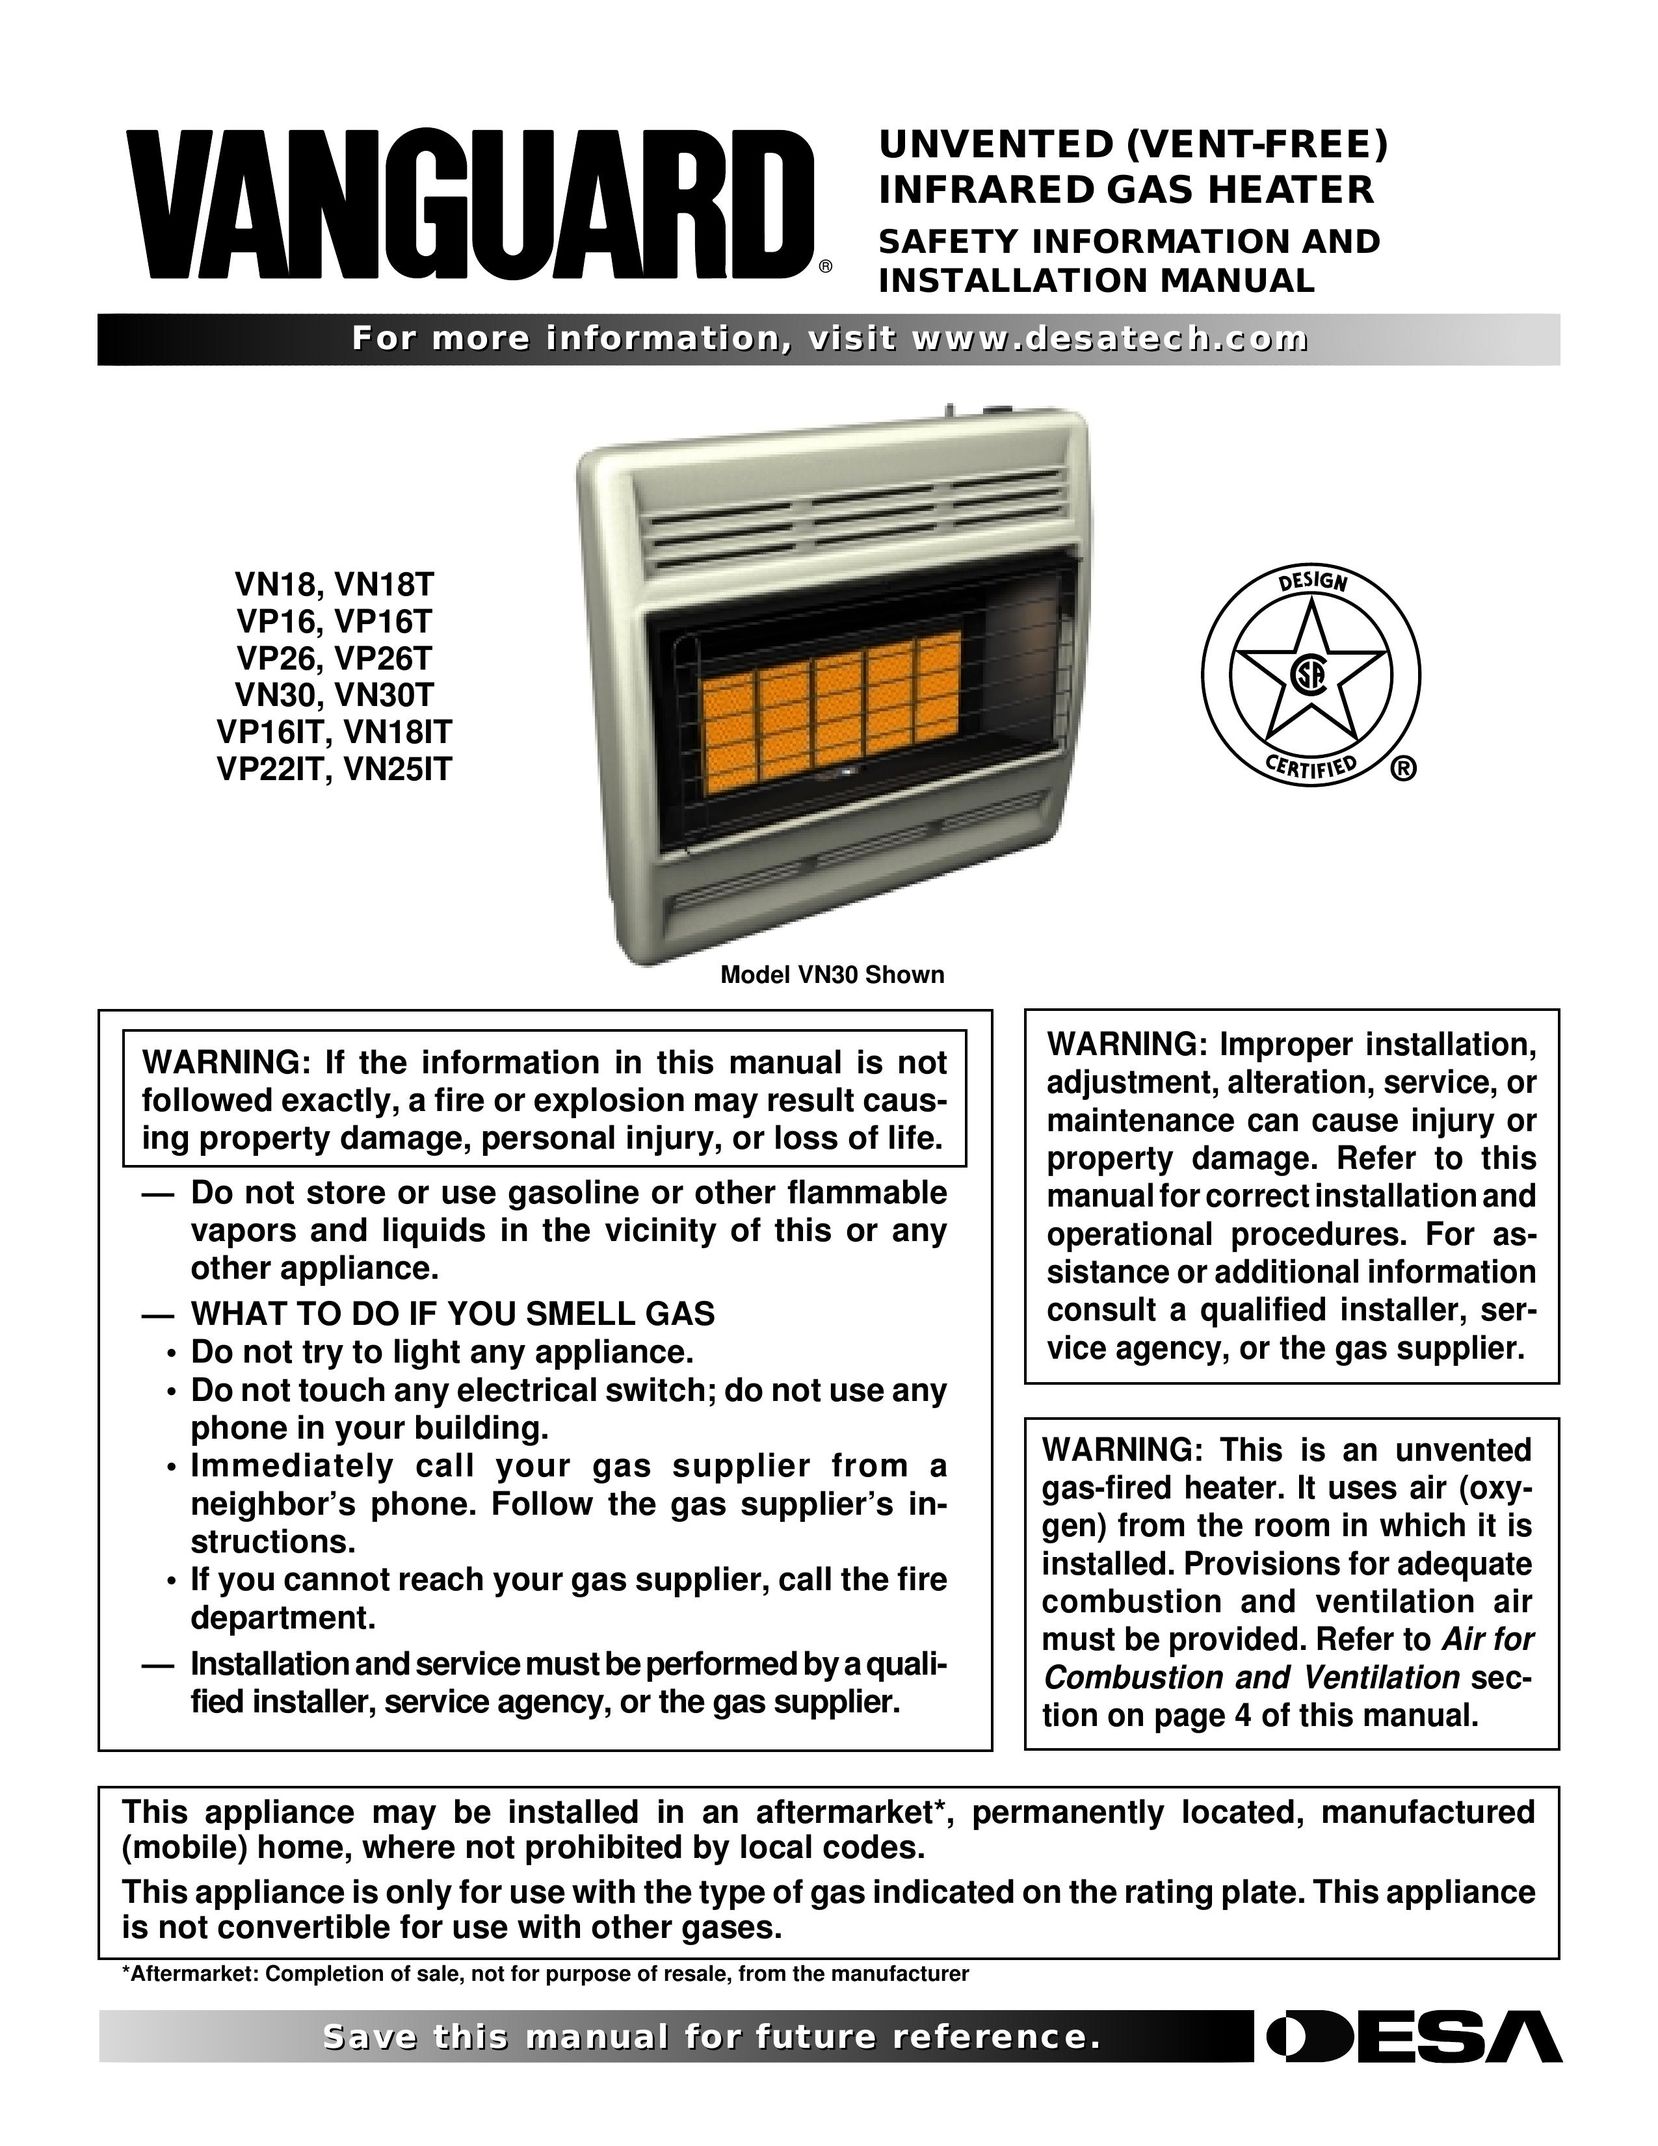 Vanguard Heating VP26T Gas Heater User Manual